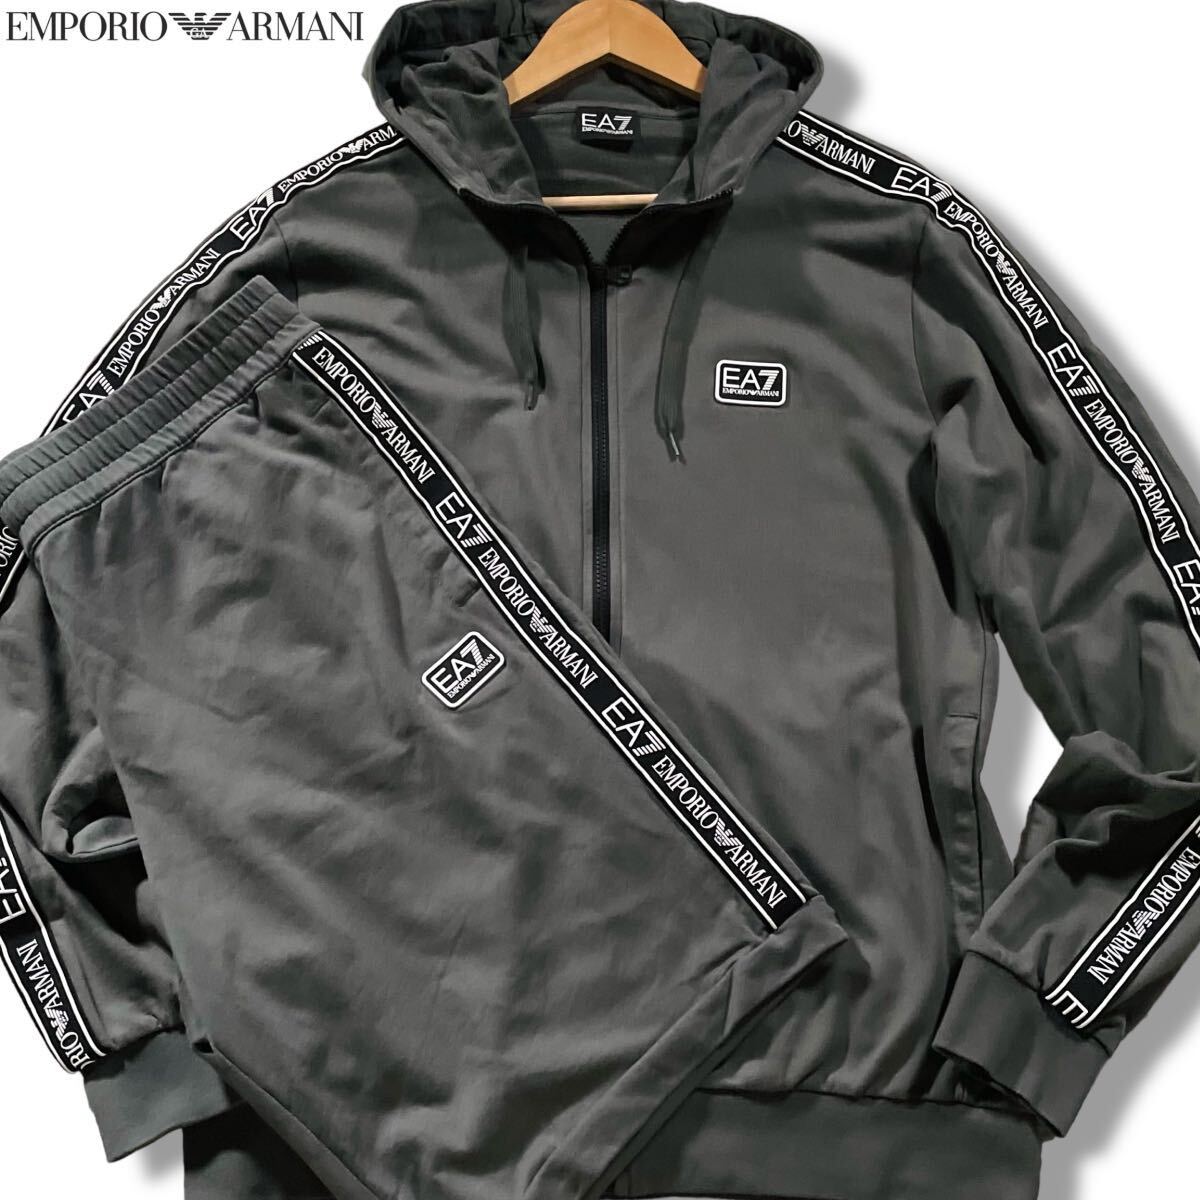  beautiful goods /XL size * Emporio Armani jersey setup Parker jacket shorts EMPORIO ARMANI EA7 Logo line tape 